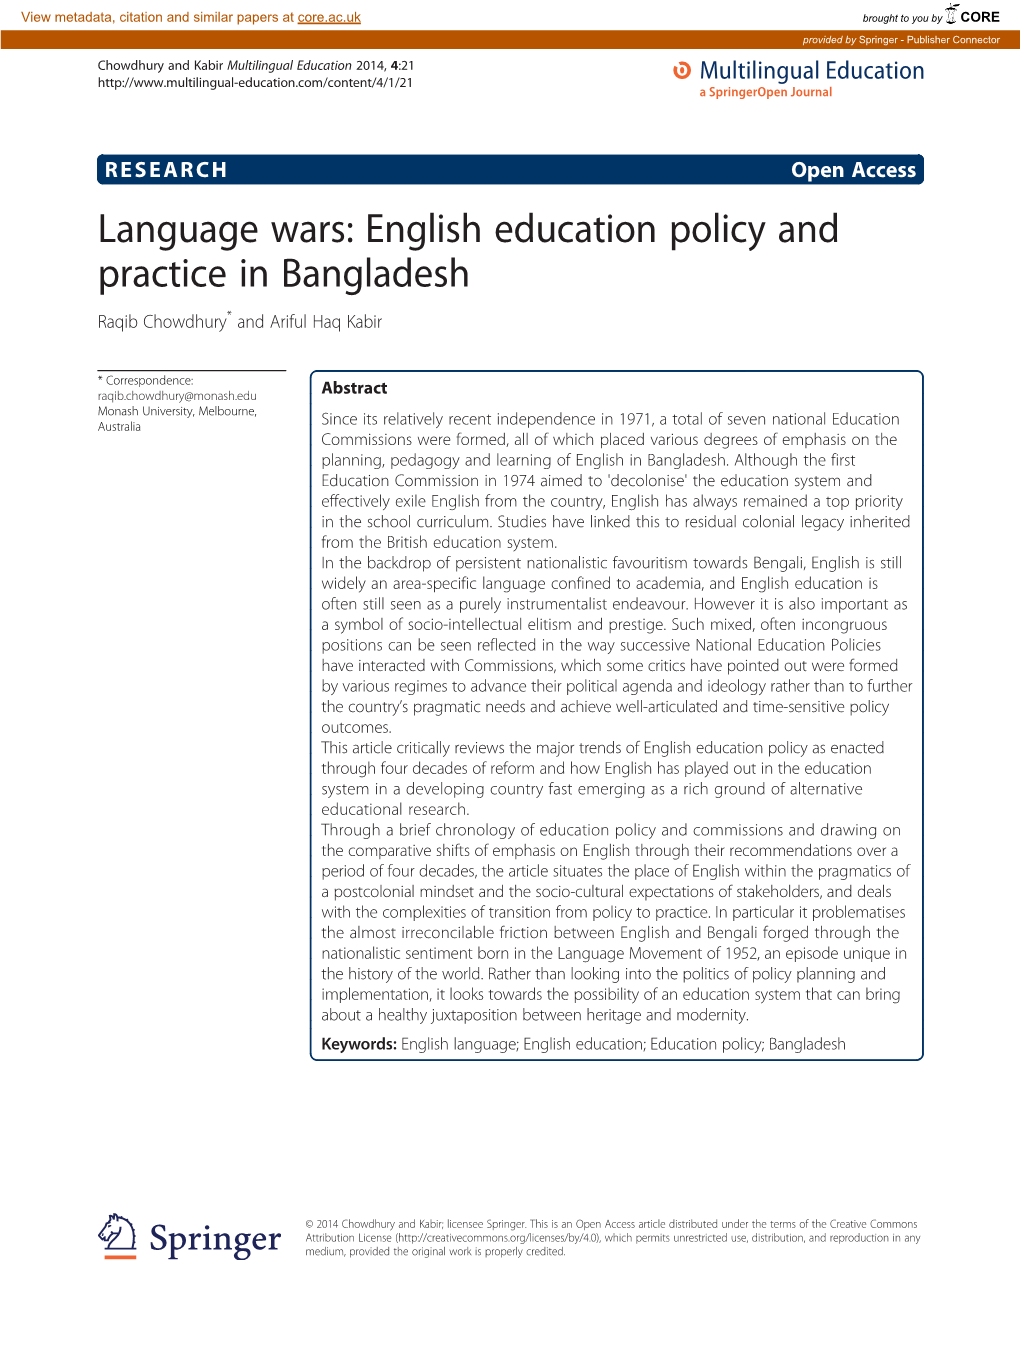 Language Wars: English Education Policy and Practice in Bangladesh Raqib Chowdhury* and Ariful Haq Kabir